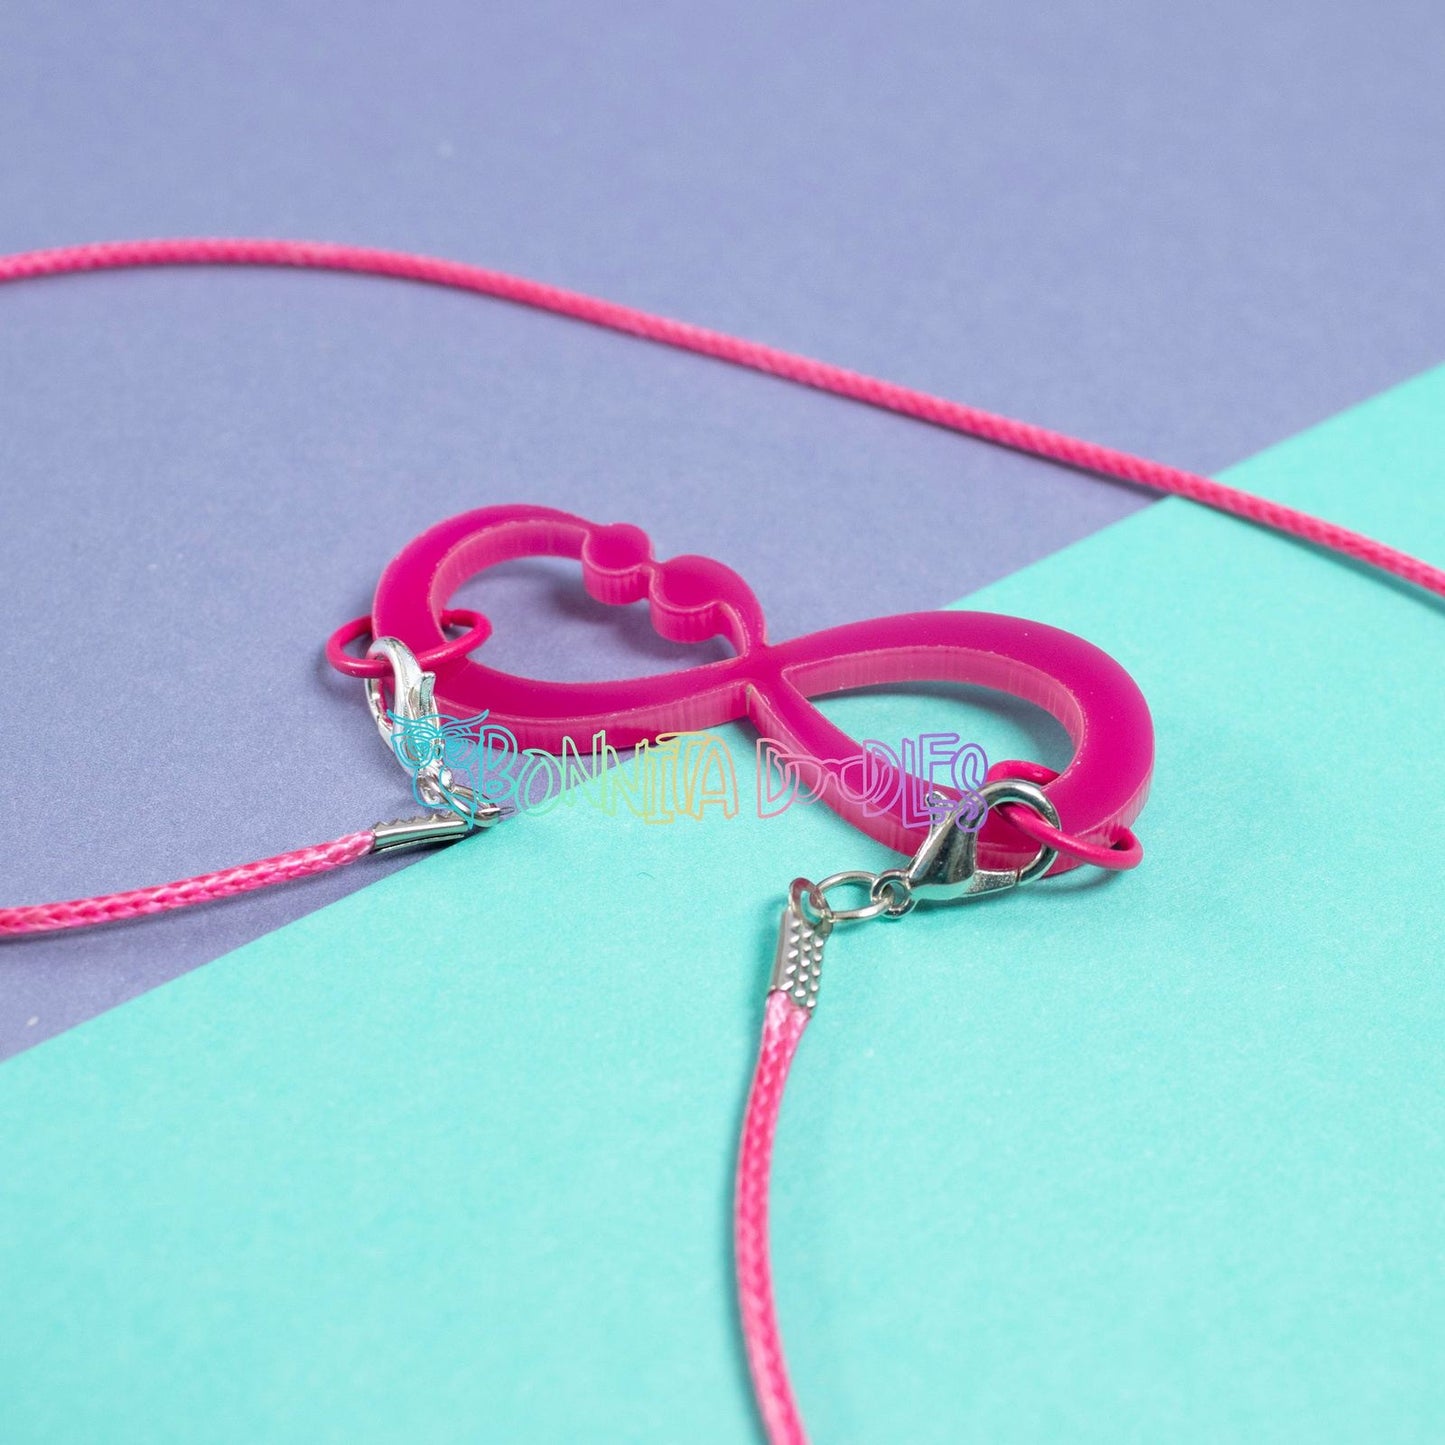 Survivor infinity necklace - Handmade gifts